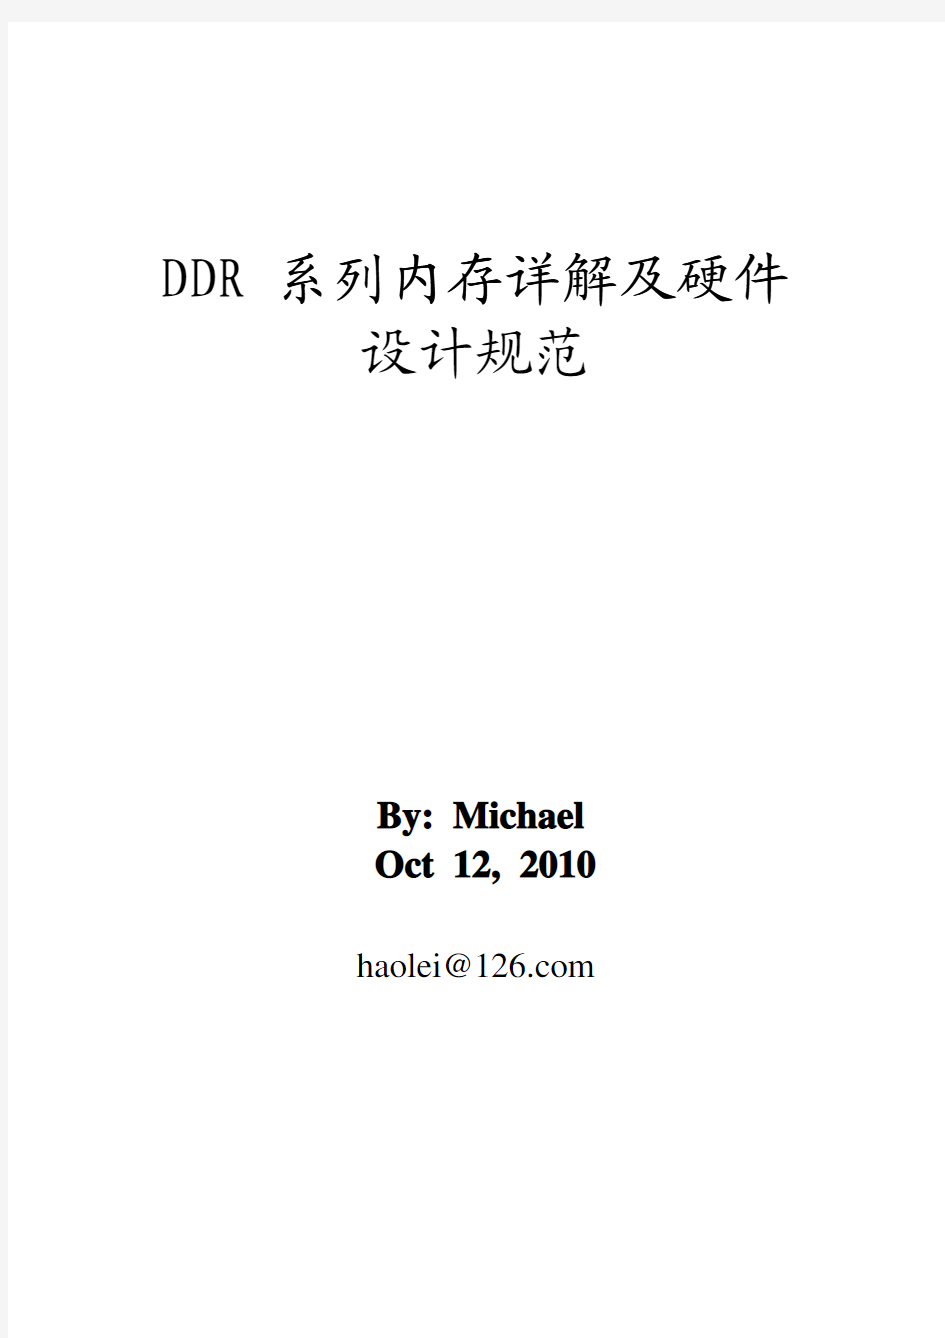 DDR系列内存详解及硬件设计规范-Michael